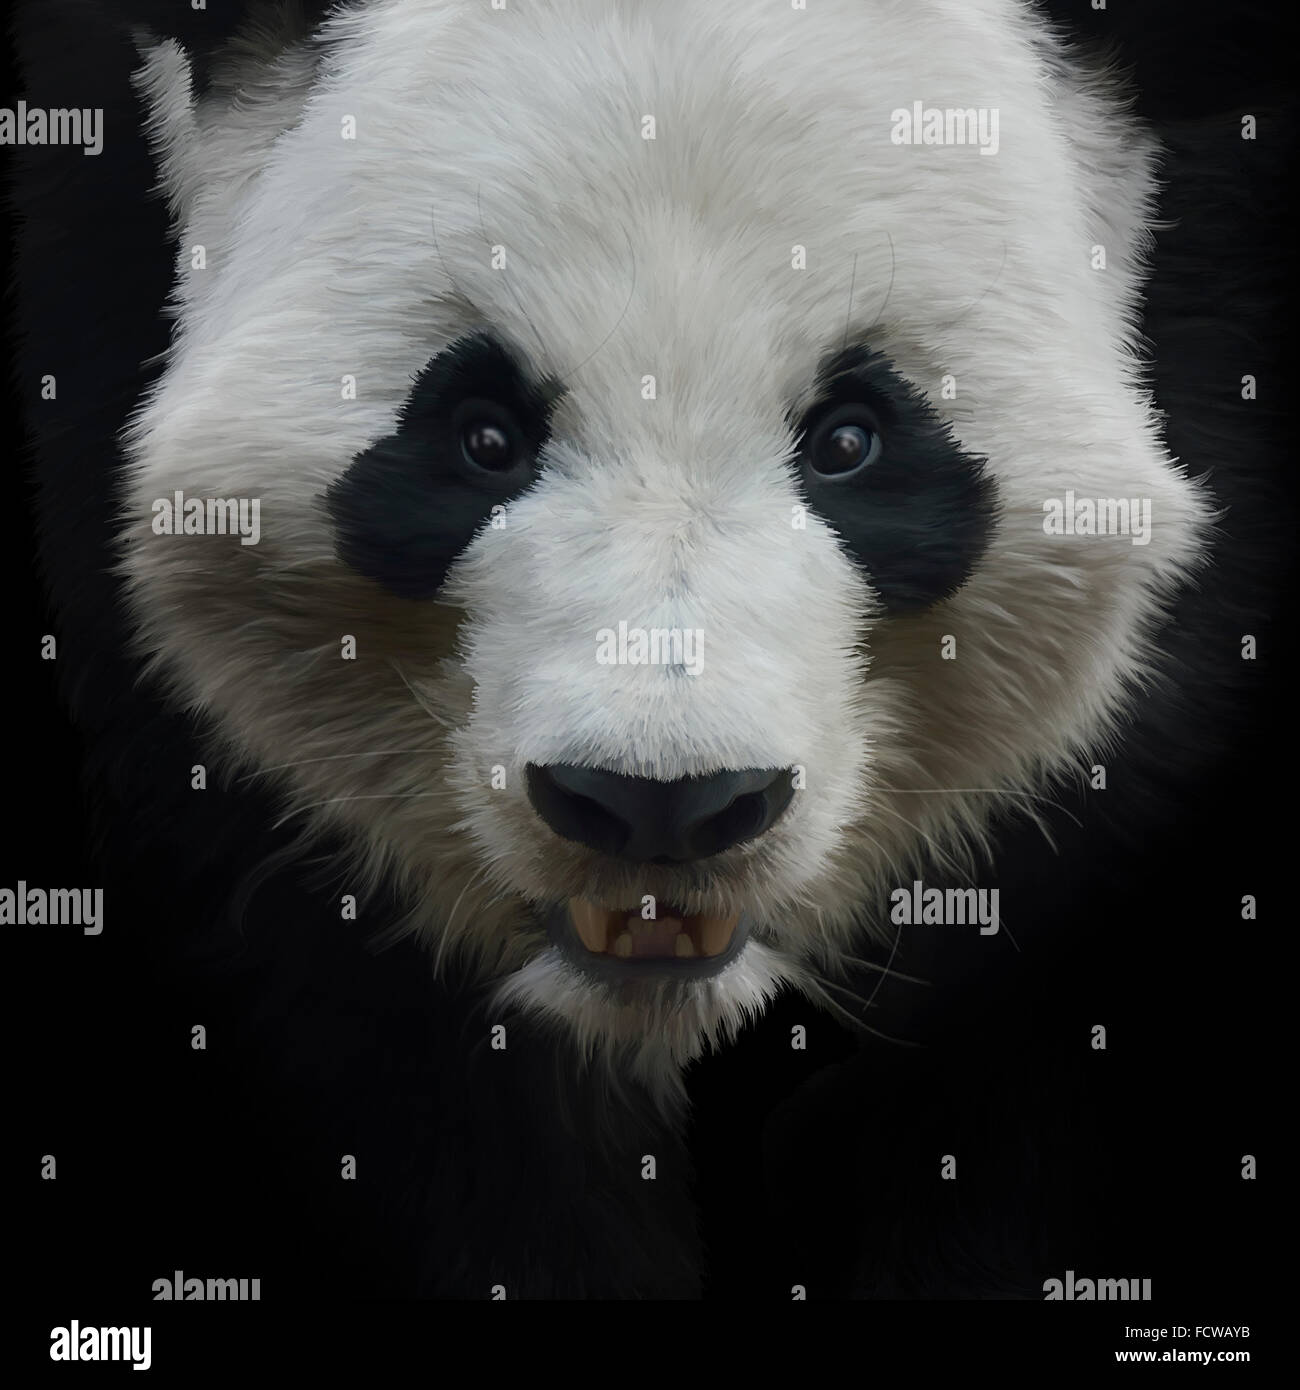 Digital Painting of Giant Panda Bear on Black Background Stock Photo